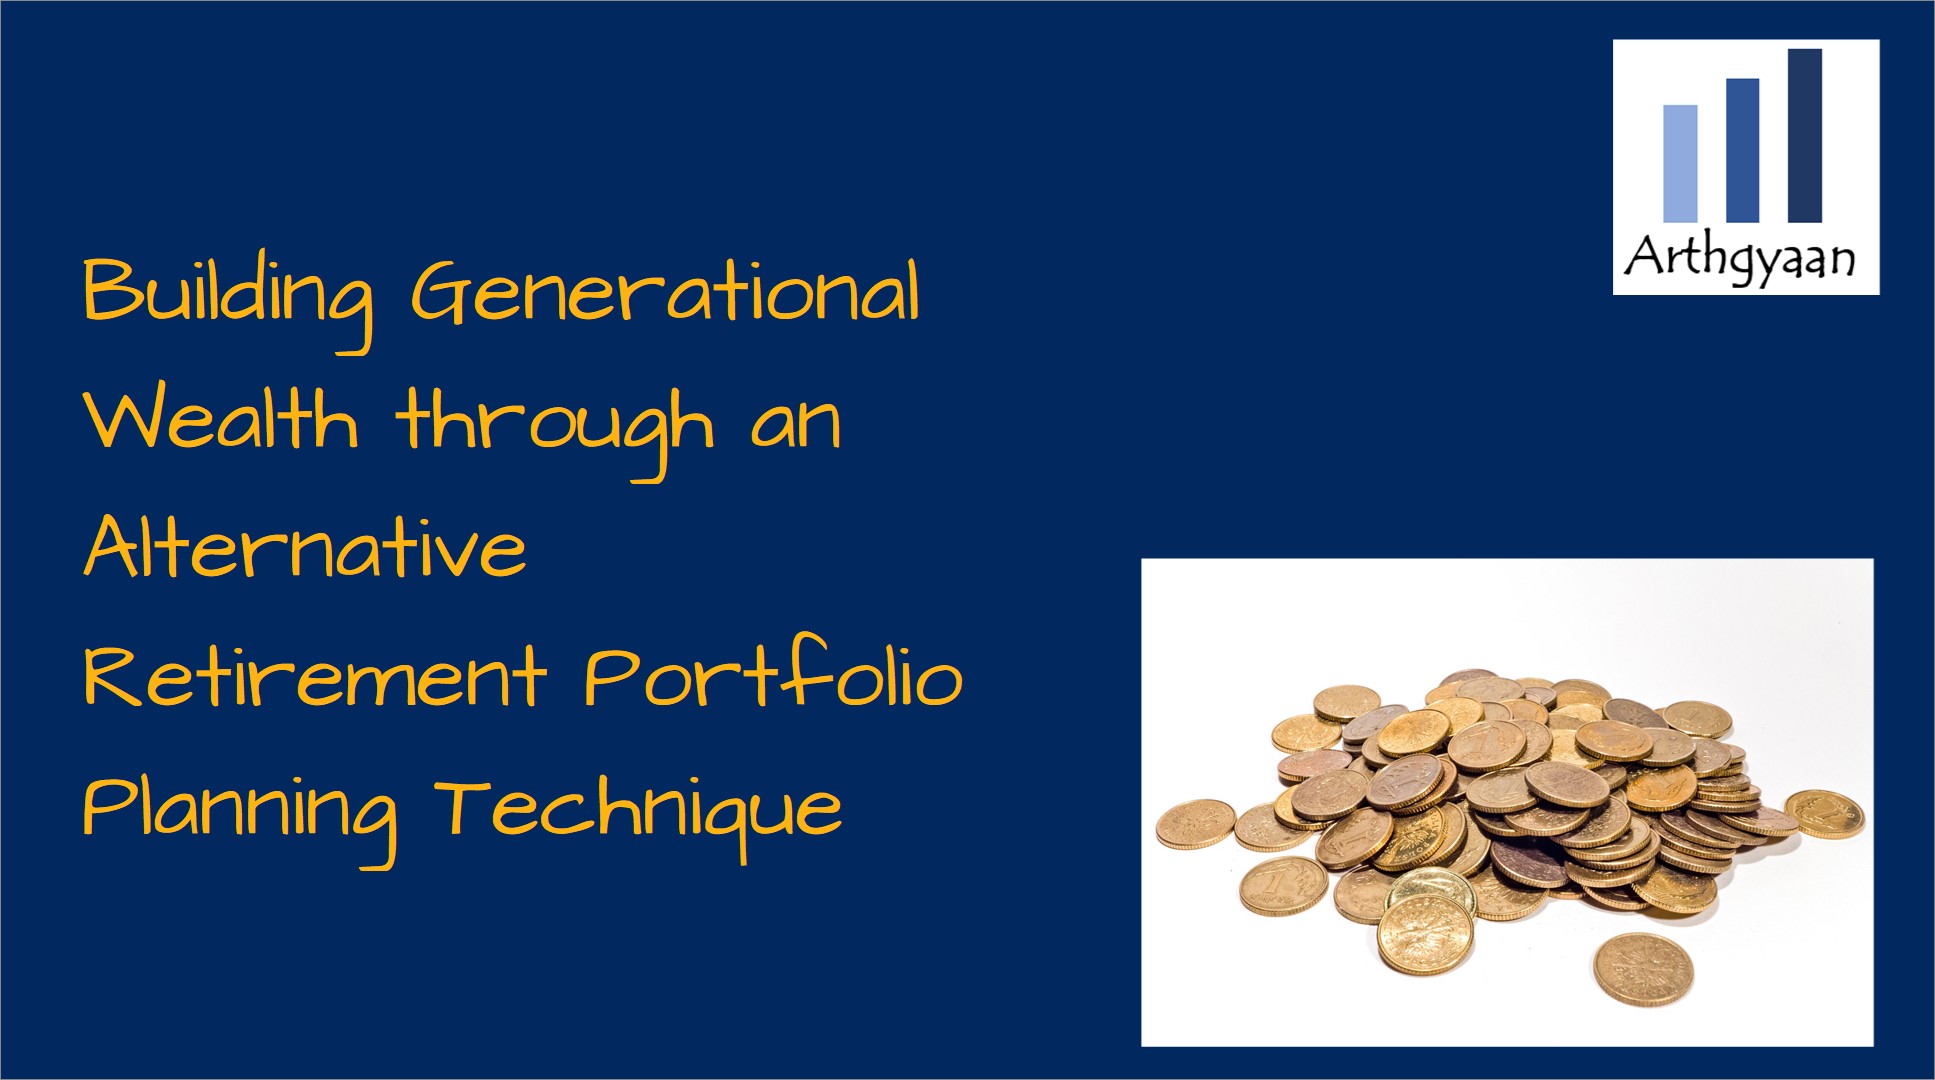 Building Generational Wealth through an Alternative Retirement Portfolio Planning Technique